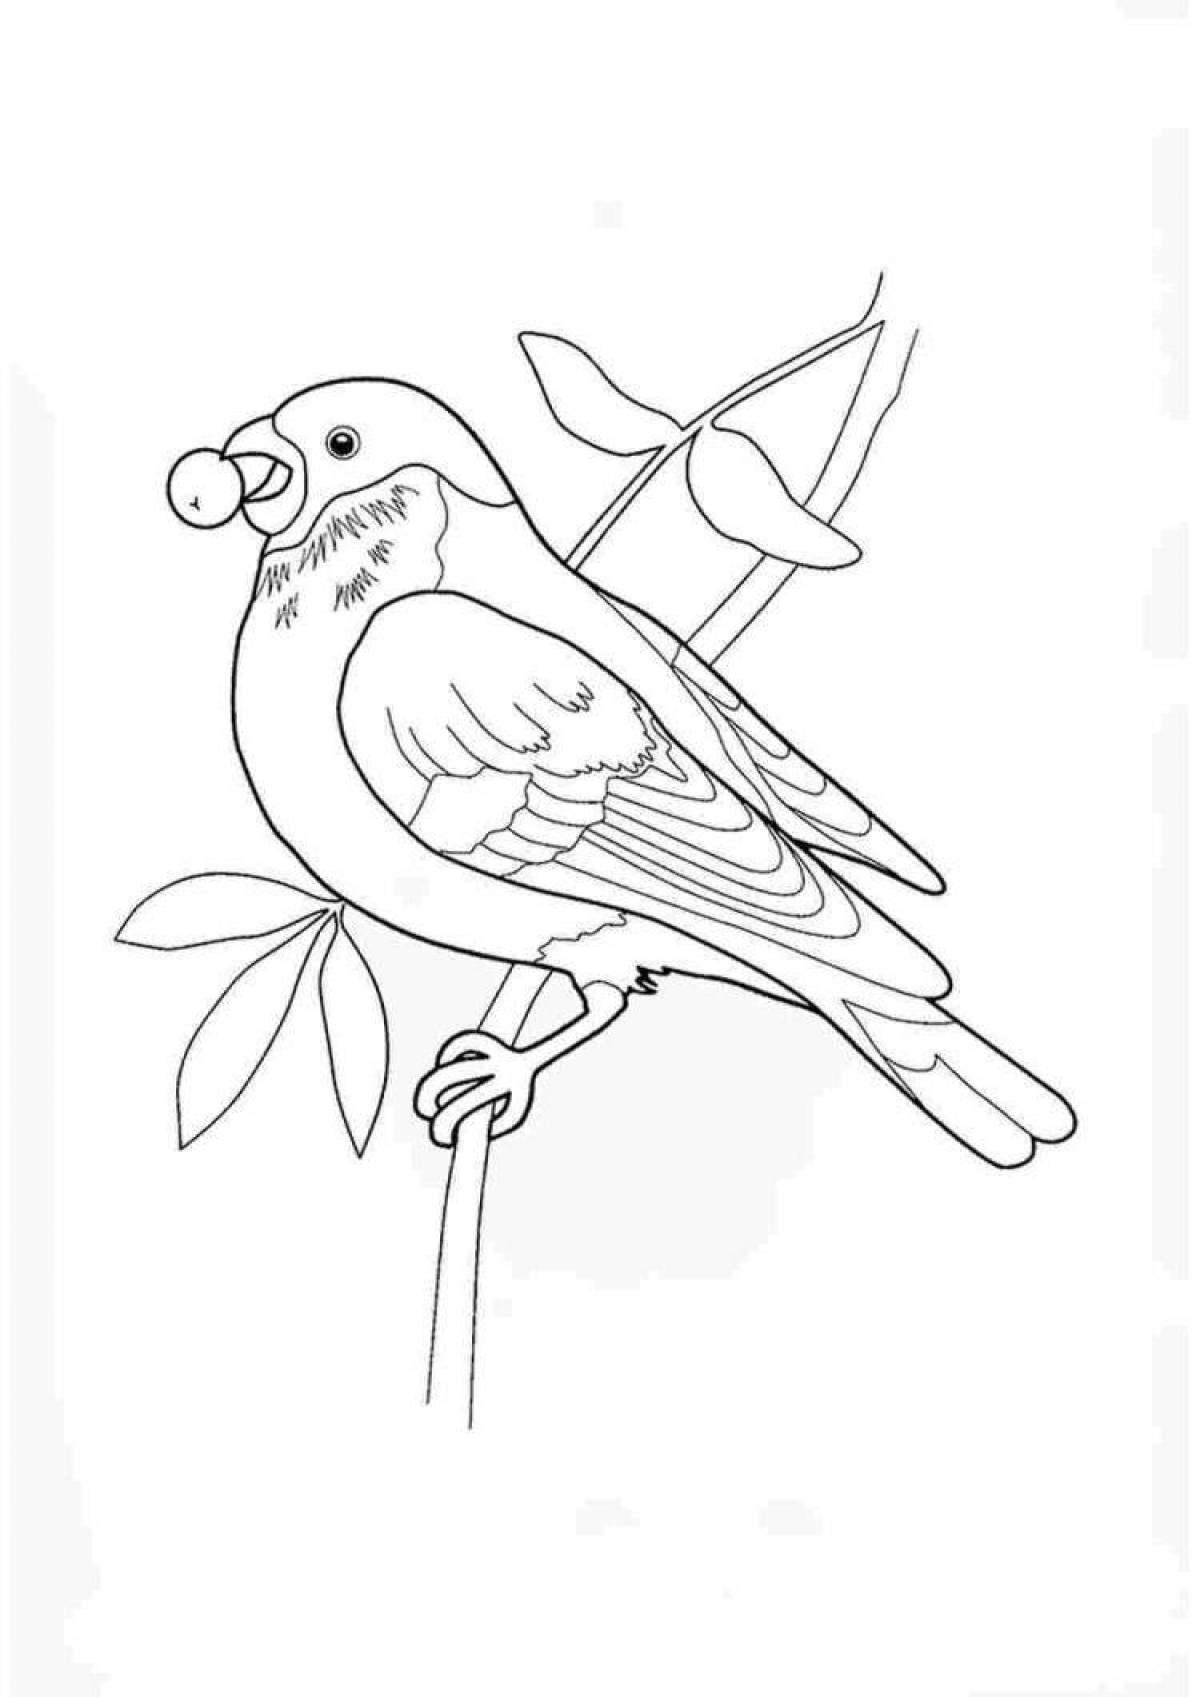 Joyful drawing of a bullfinch for children